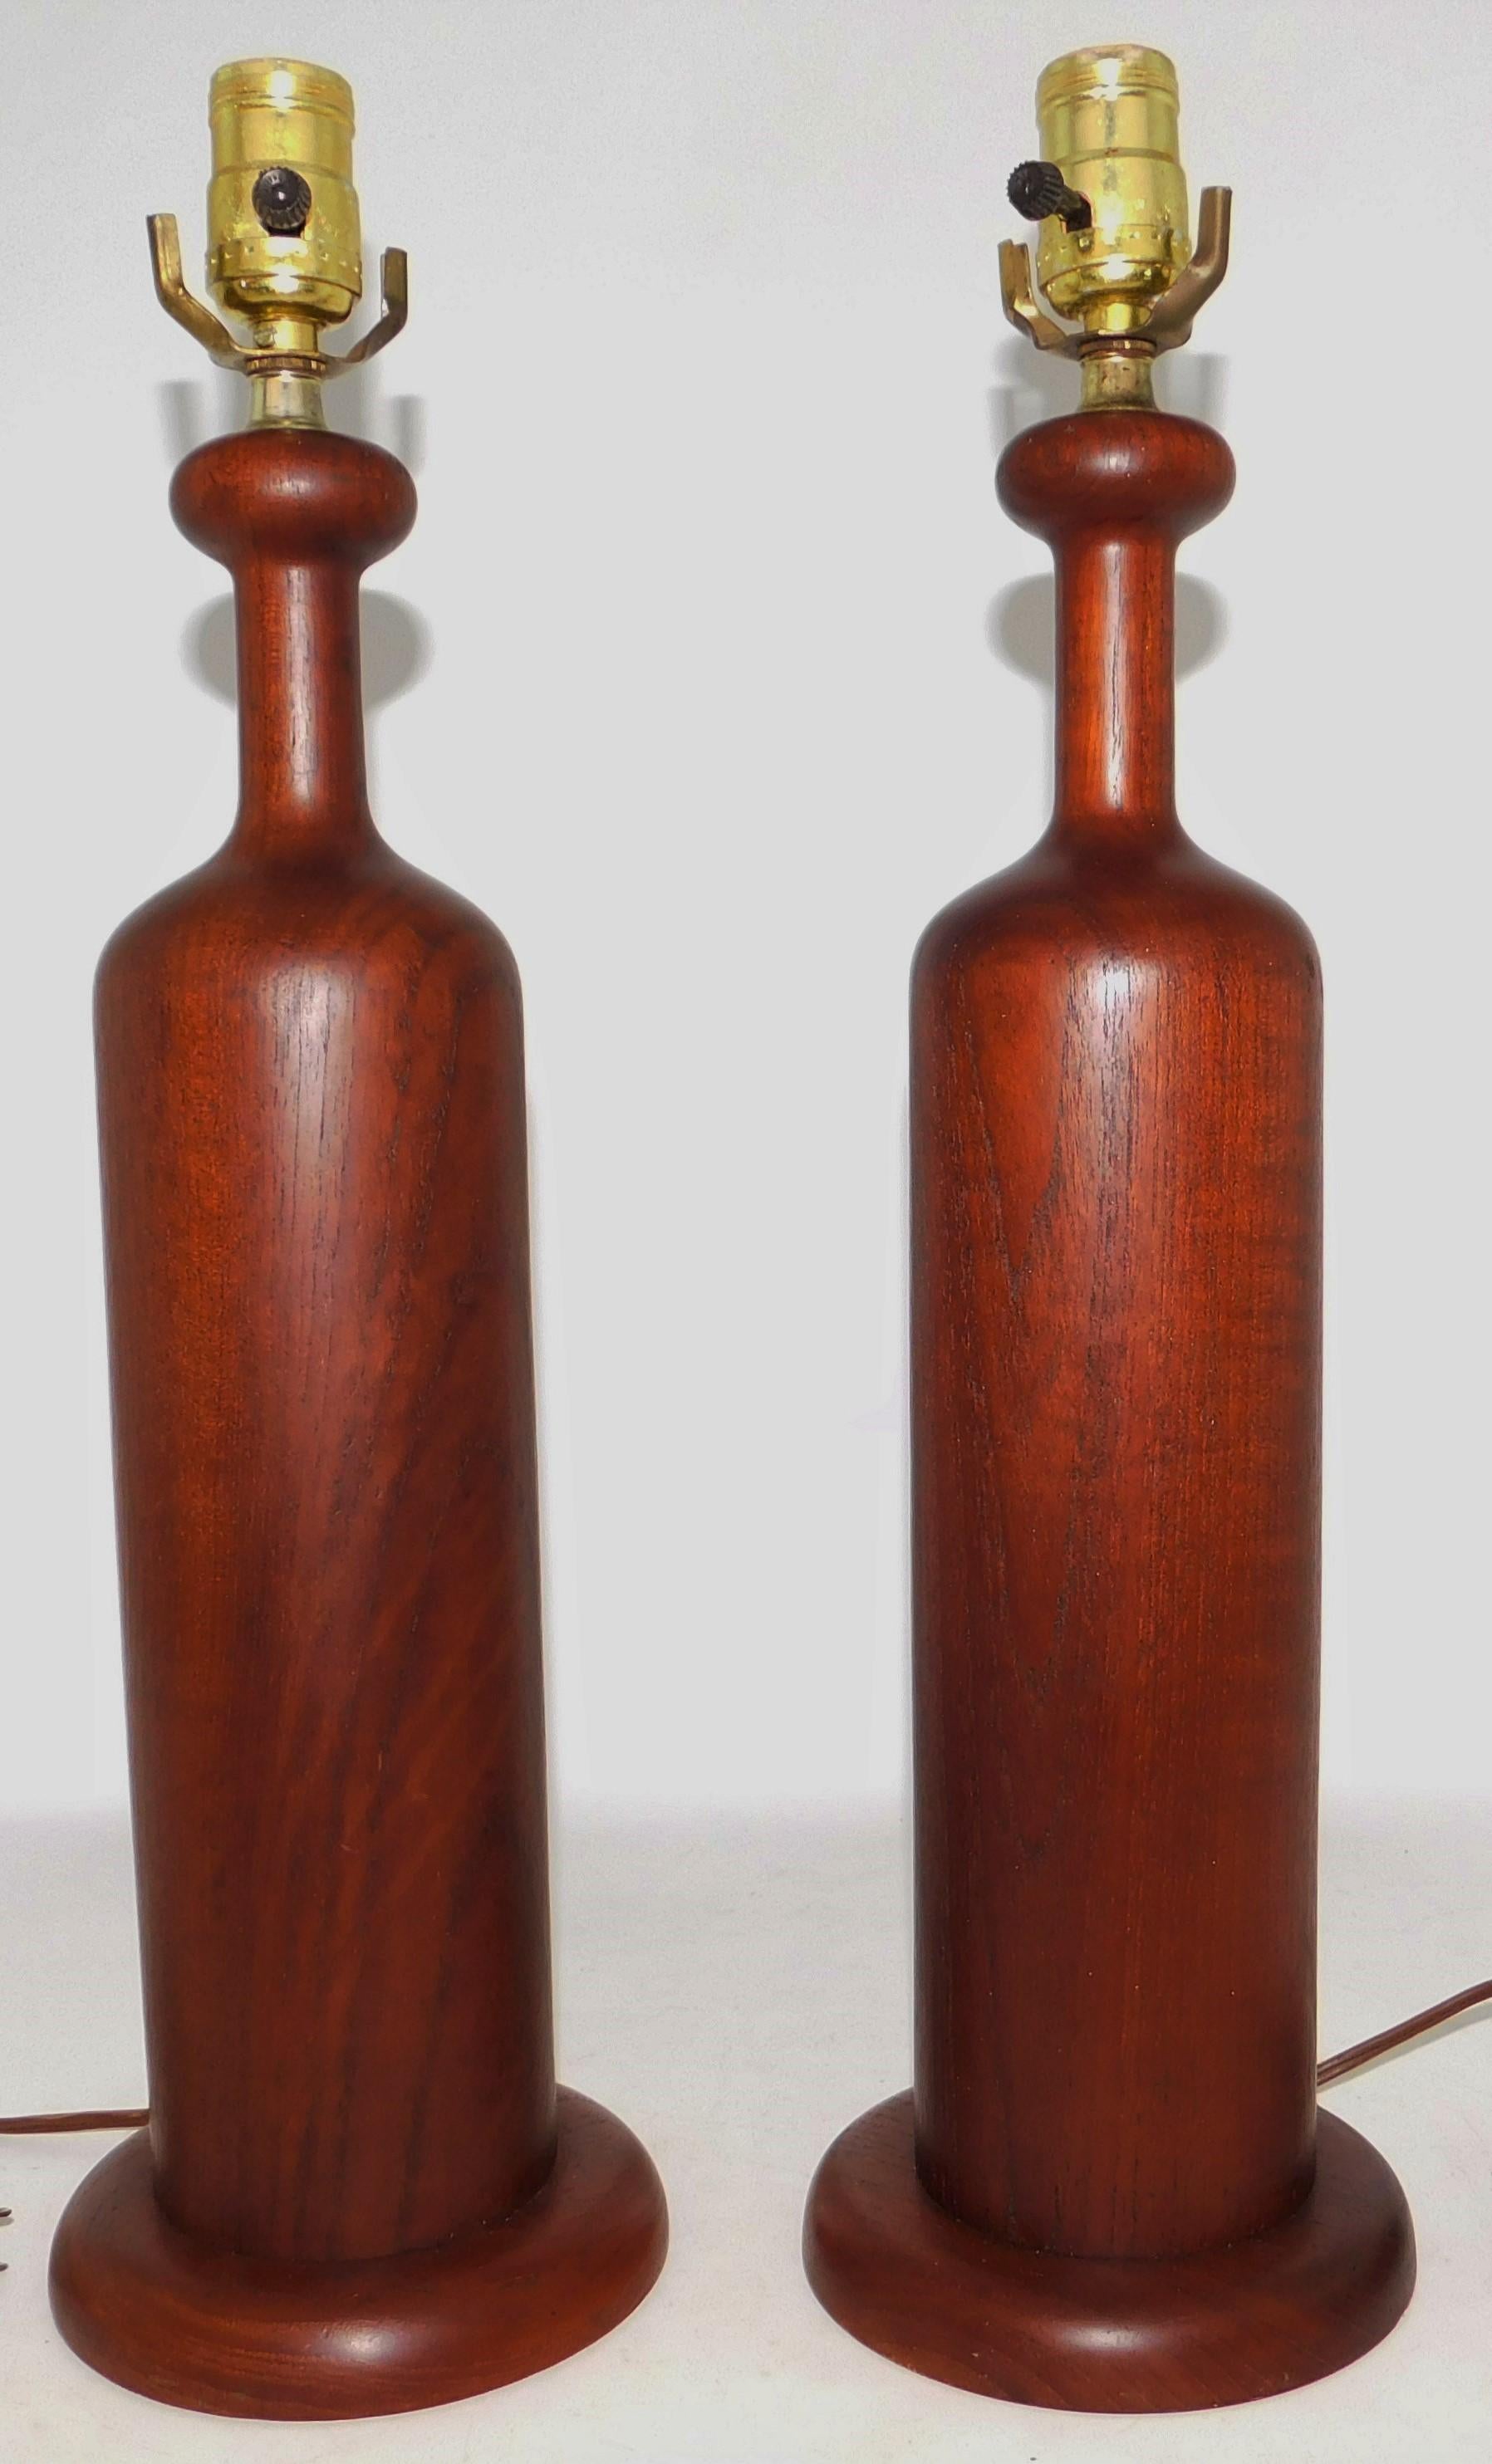 Pair of Danish Teak Sculptural Table Lamps Midcentury Scandinavian Modern In Good Condition For Sale In Hamilton, Ontario